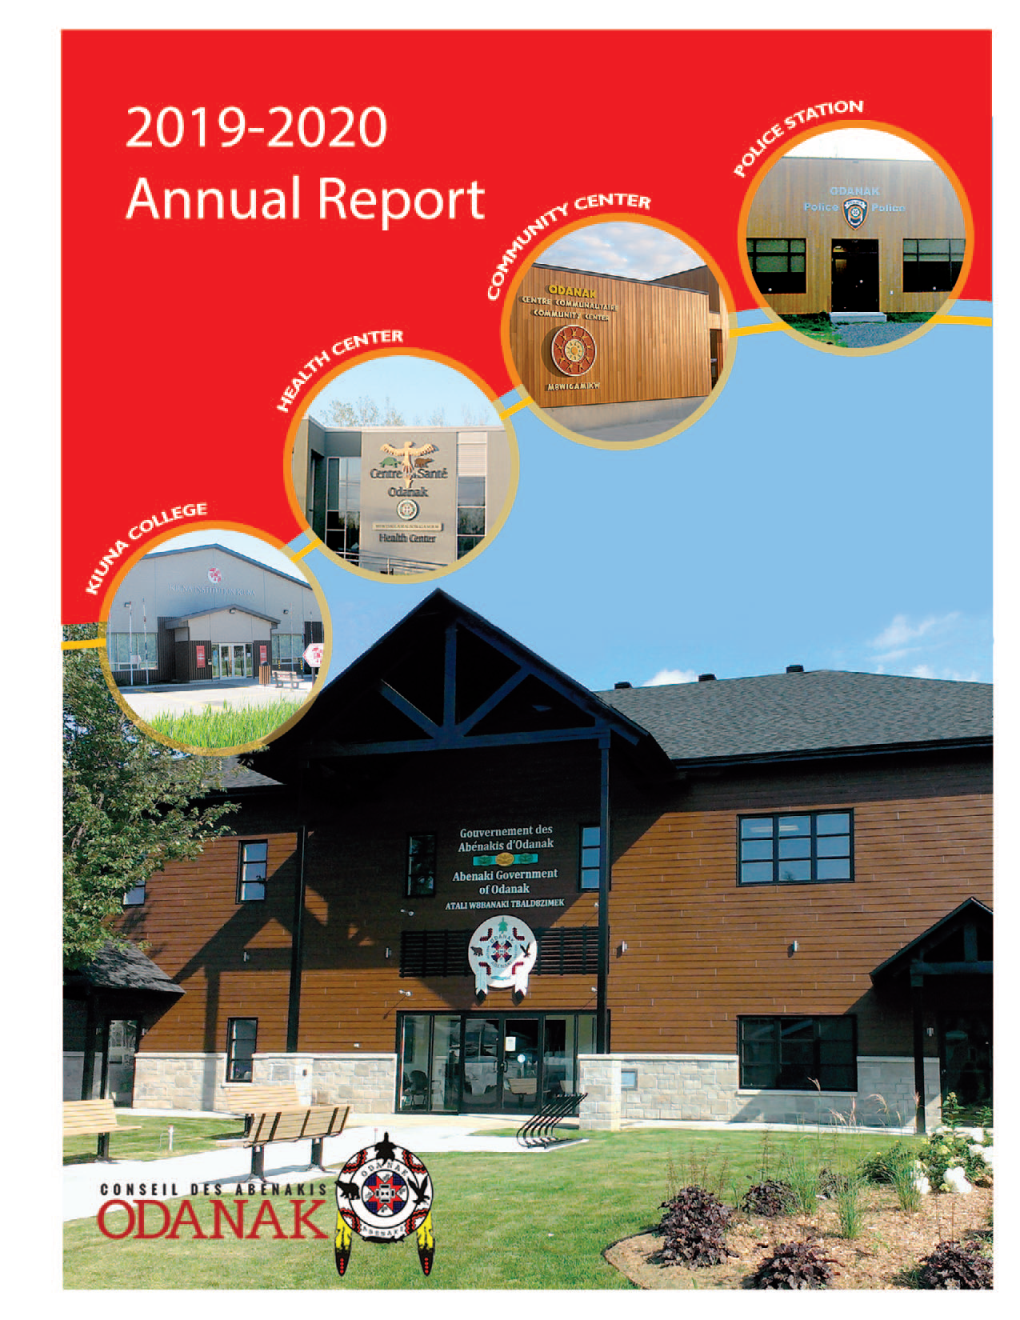 Annual Report, 2019-2020